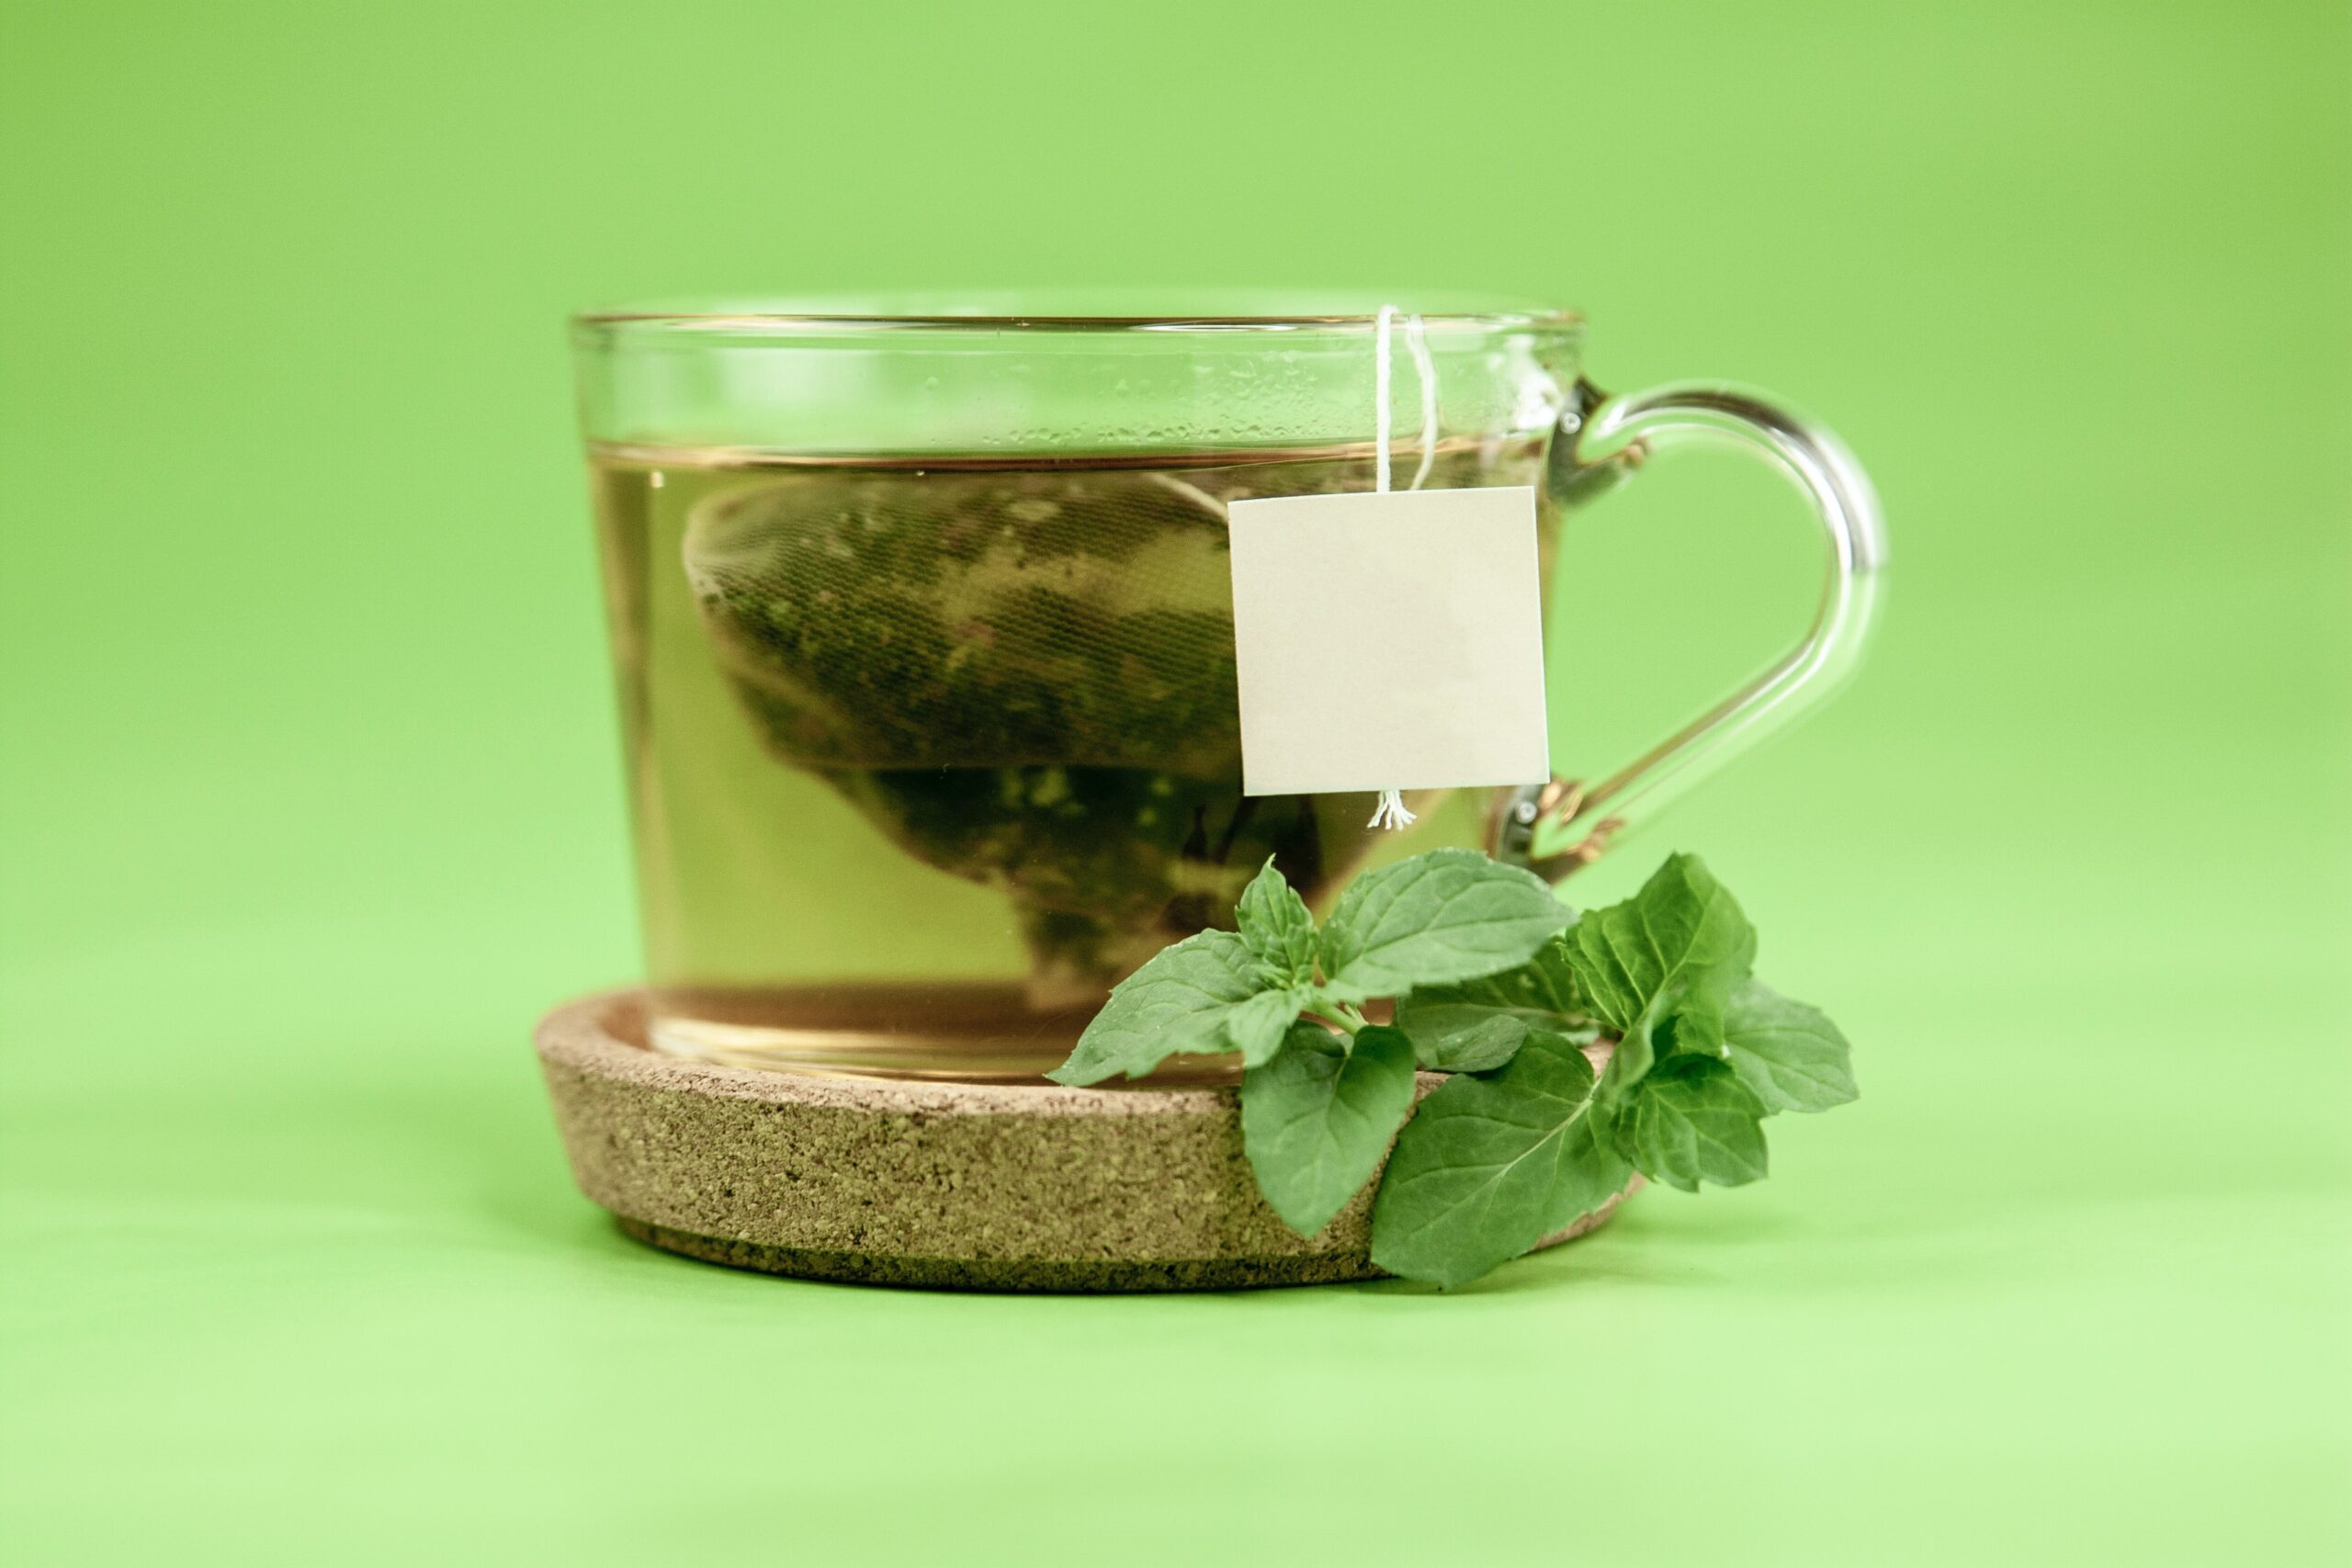 Does green tea have caffeine?